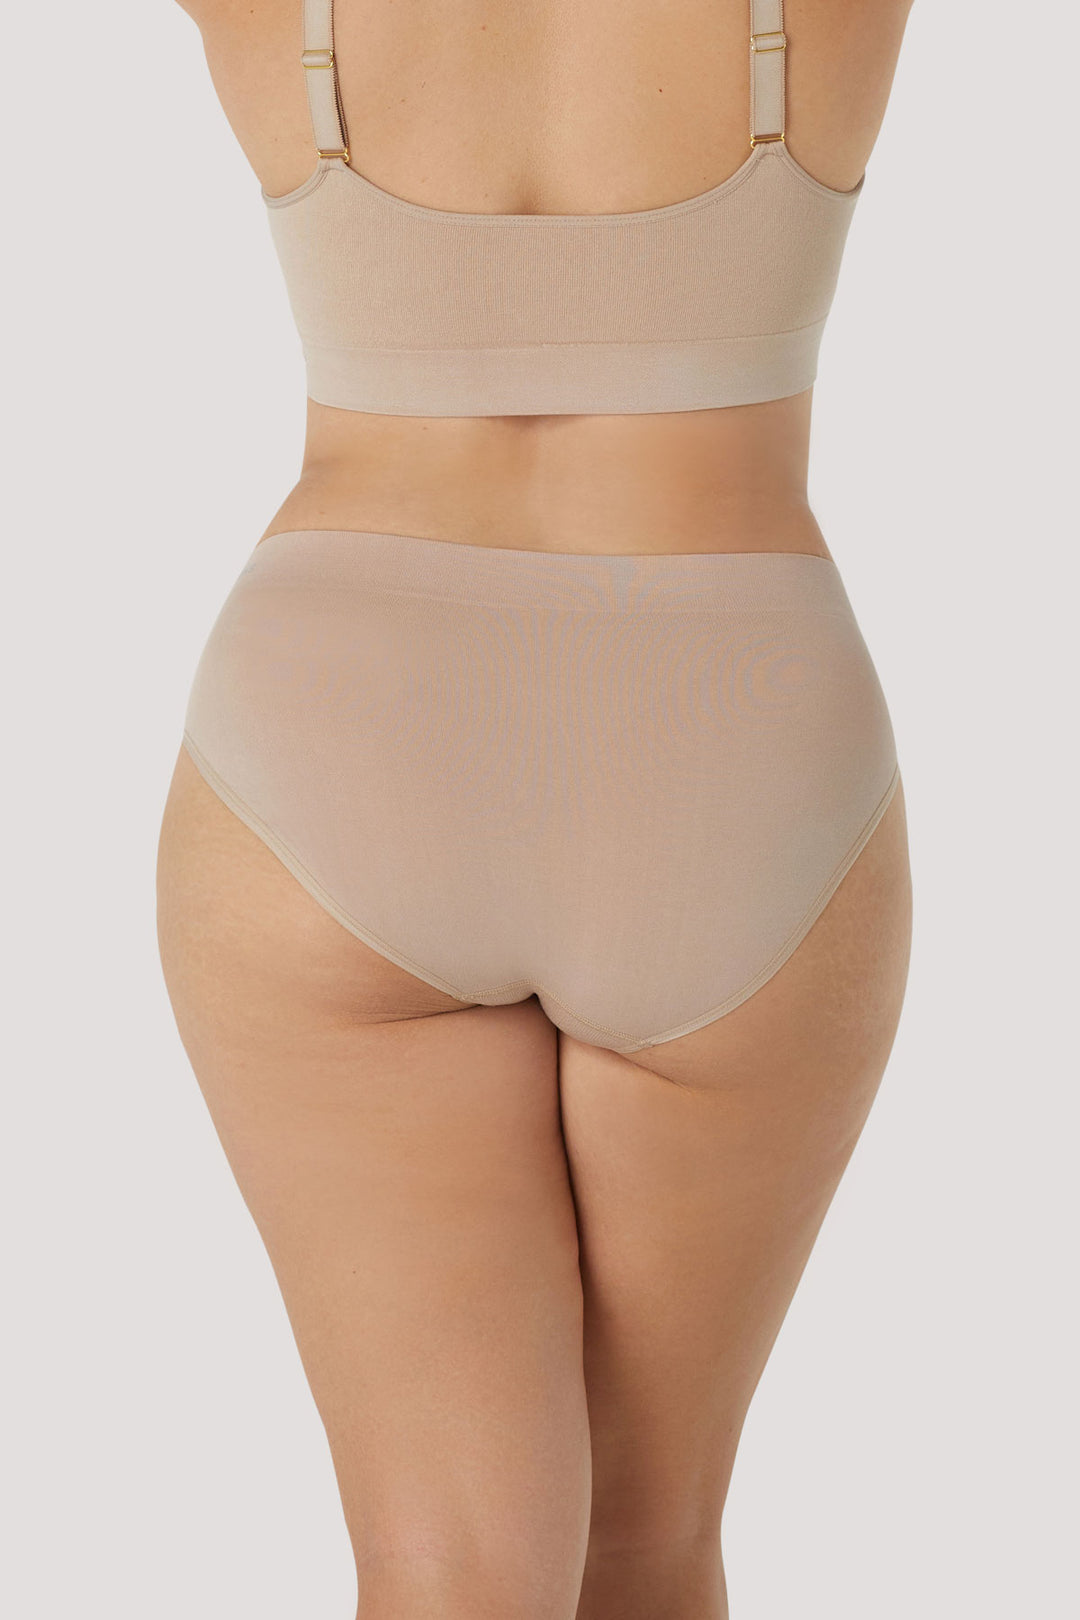 Women's comfortable & breathable underwear I Bamboo Knickers | Bella Bodies Australia I Sand | Back